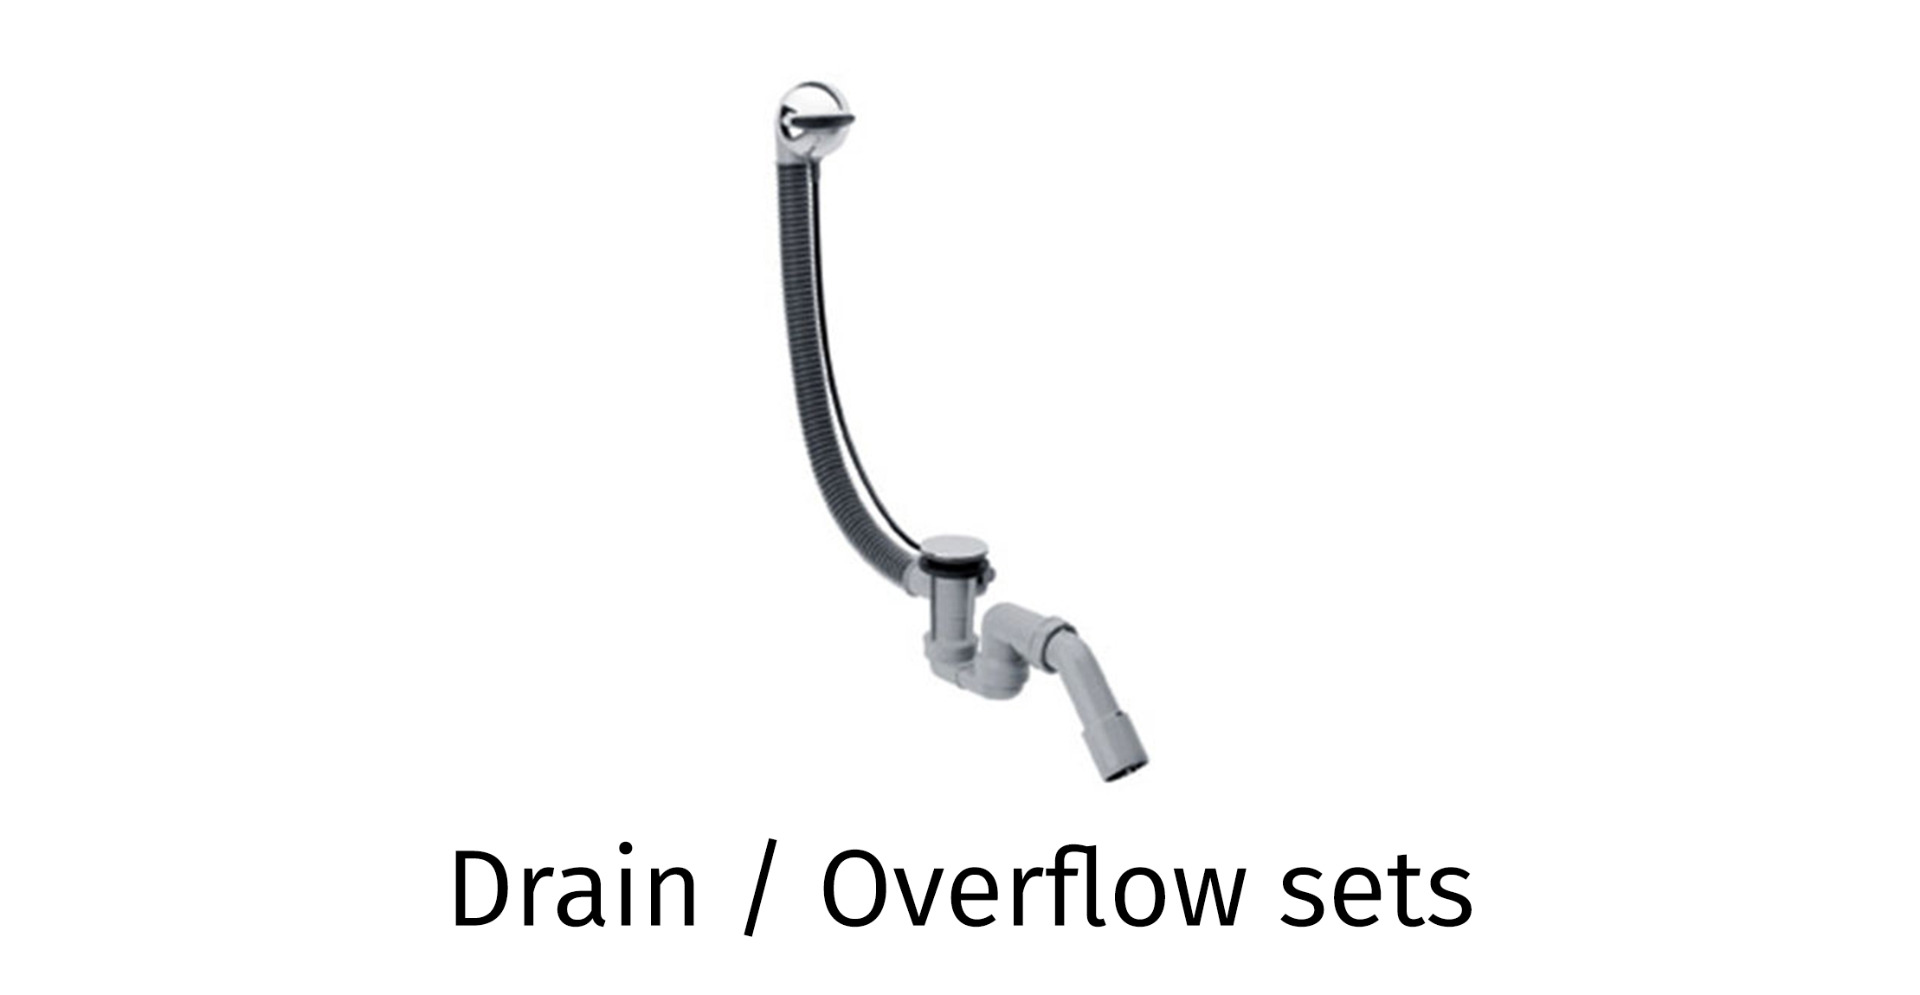 Drain / Overflow sets